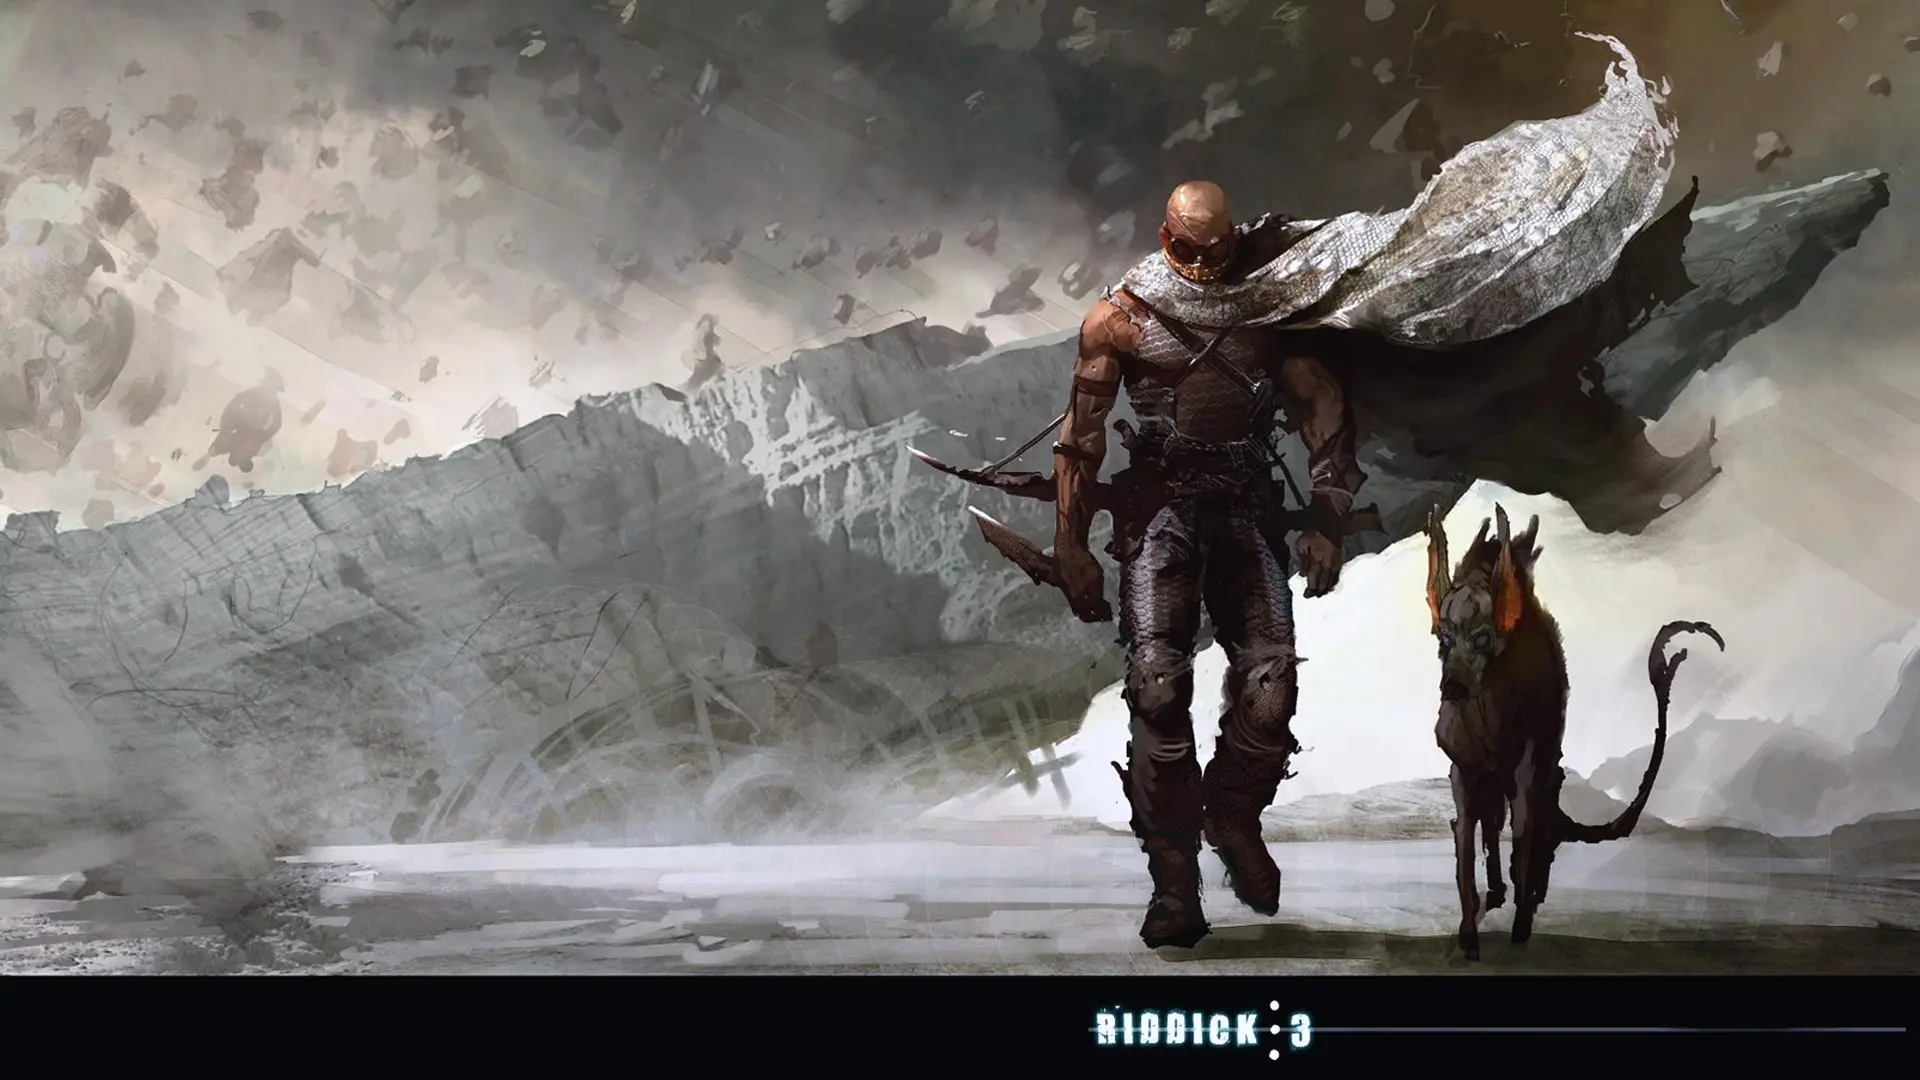 Movie Riddick wallpaper 3 | Background Image